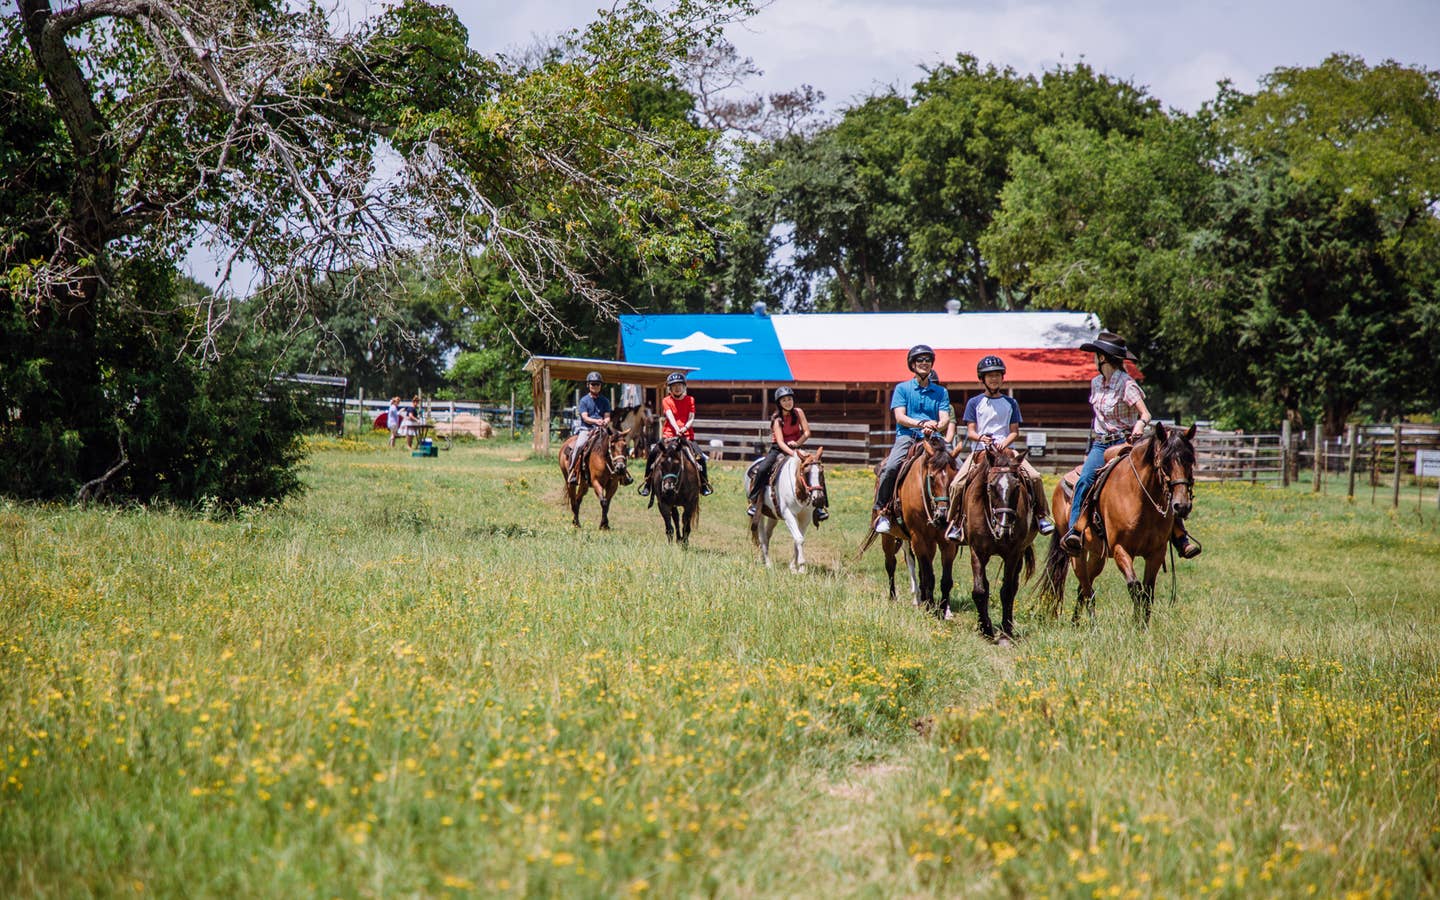 Guests riding horses at Villages Resort in Flint, Texas.